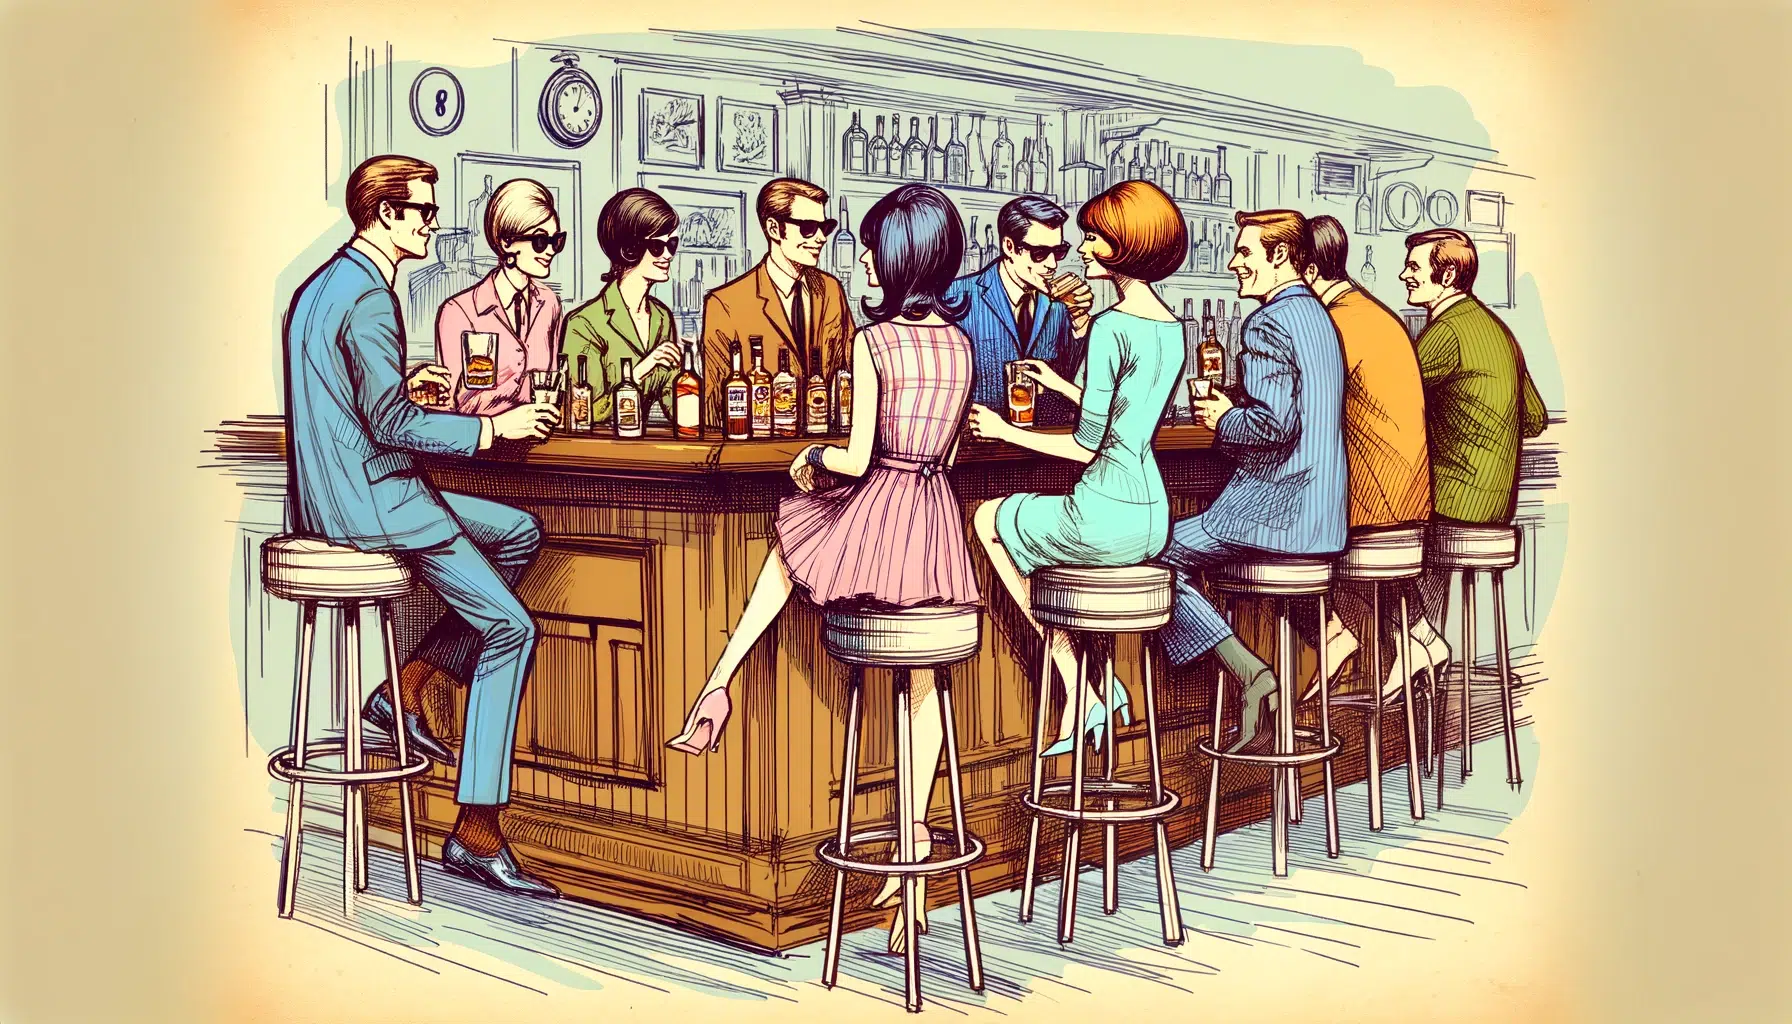 Illustration of vintage bar scene with people socializing.